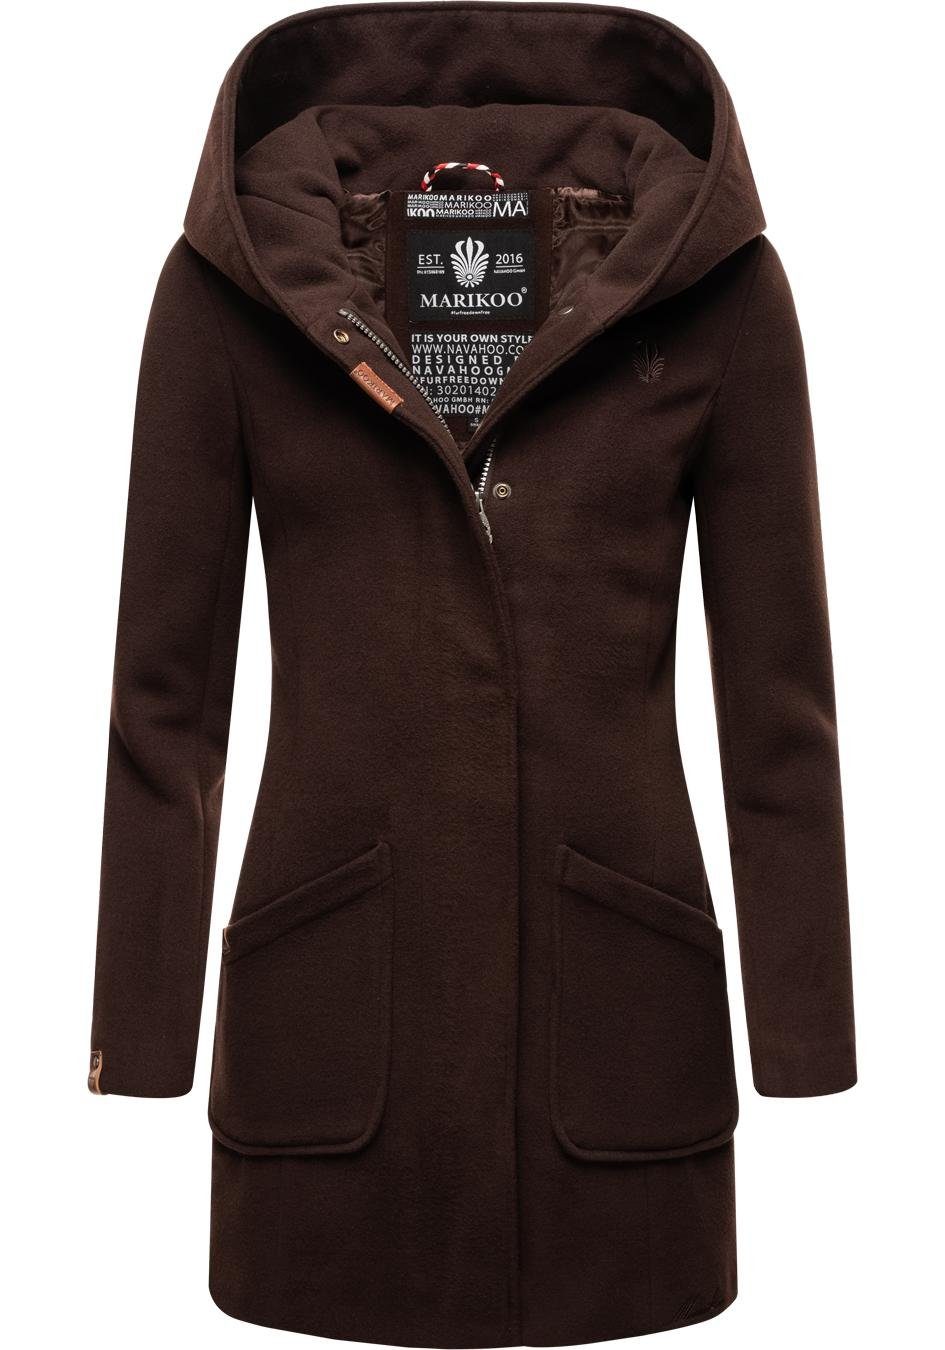 Marikoo Wintermantel Maikoo hochwertiger Mantel mit dunkelbraun großer Kapuze